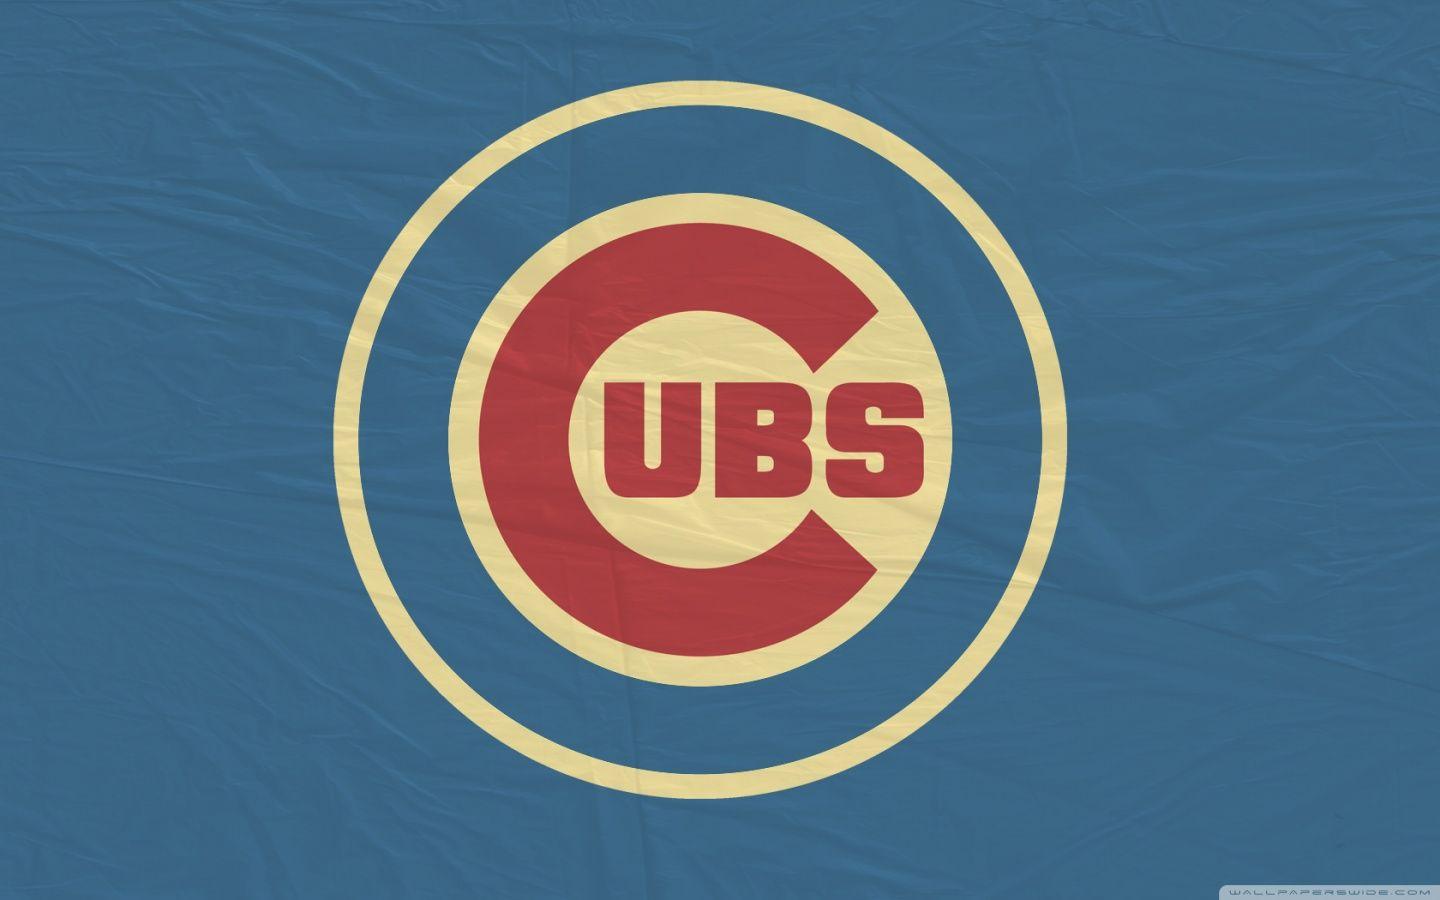 Chicago Cubs Wallpaper Background #chicago #cubs. Desktop